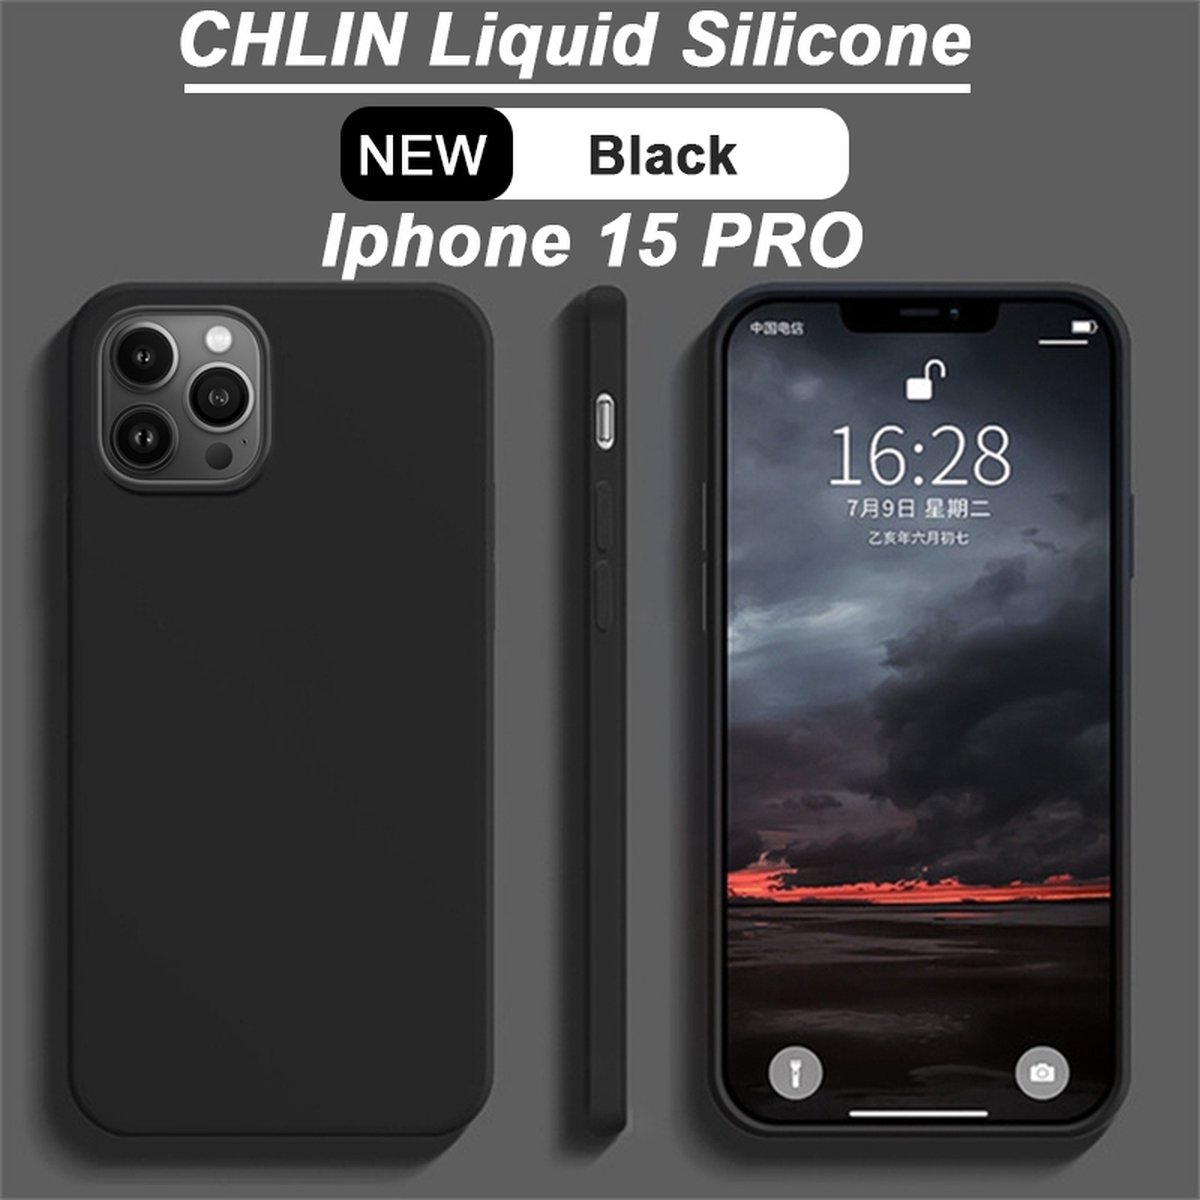 CL CHLIN® Premium Siliconen Case iPhone 15 Pro ZWART - iPhone 15 Pro hoesje - iPhone 15 Pro case - iPhone 15 Pro hoes - Silicone hoesje - iPhone 15 Pro protection - iPhone 15 Pro protector.